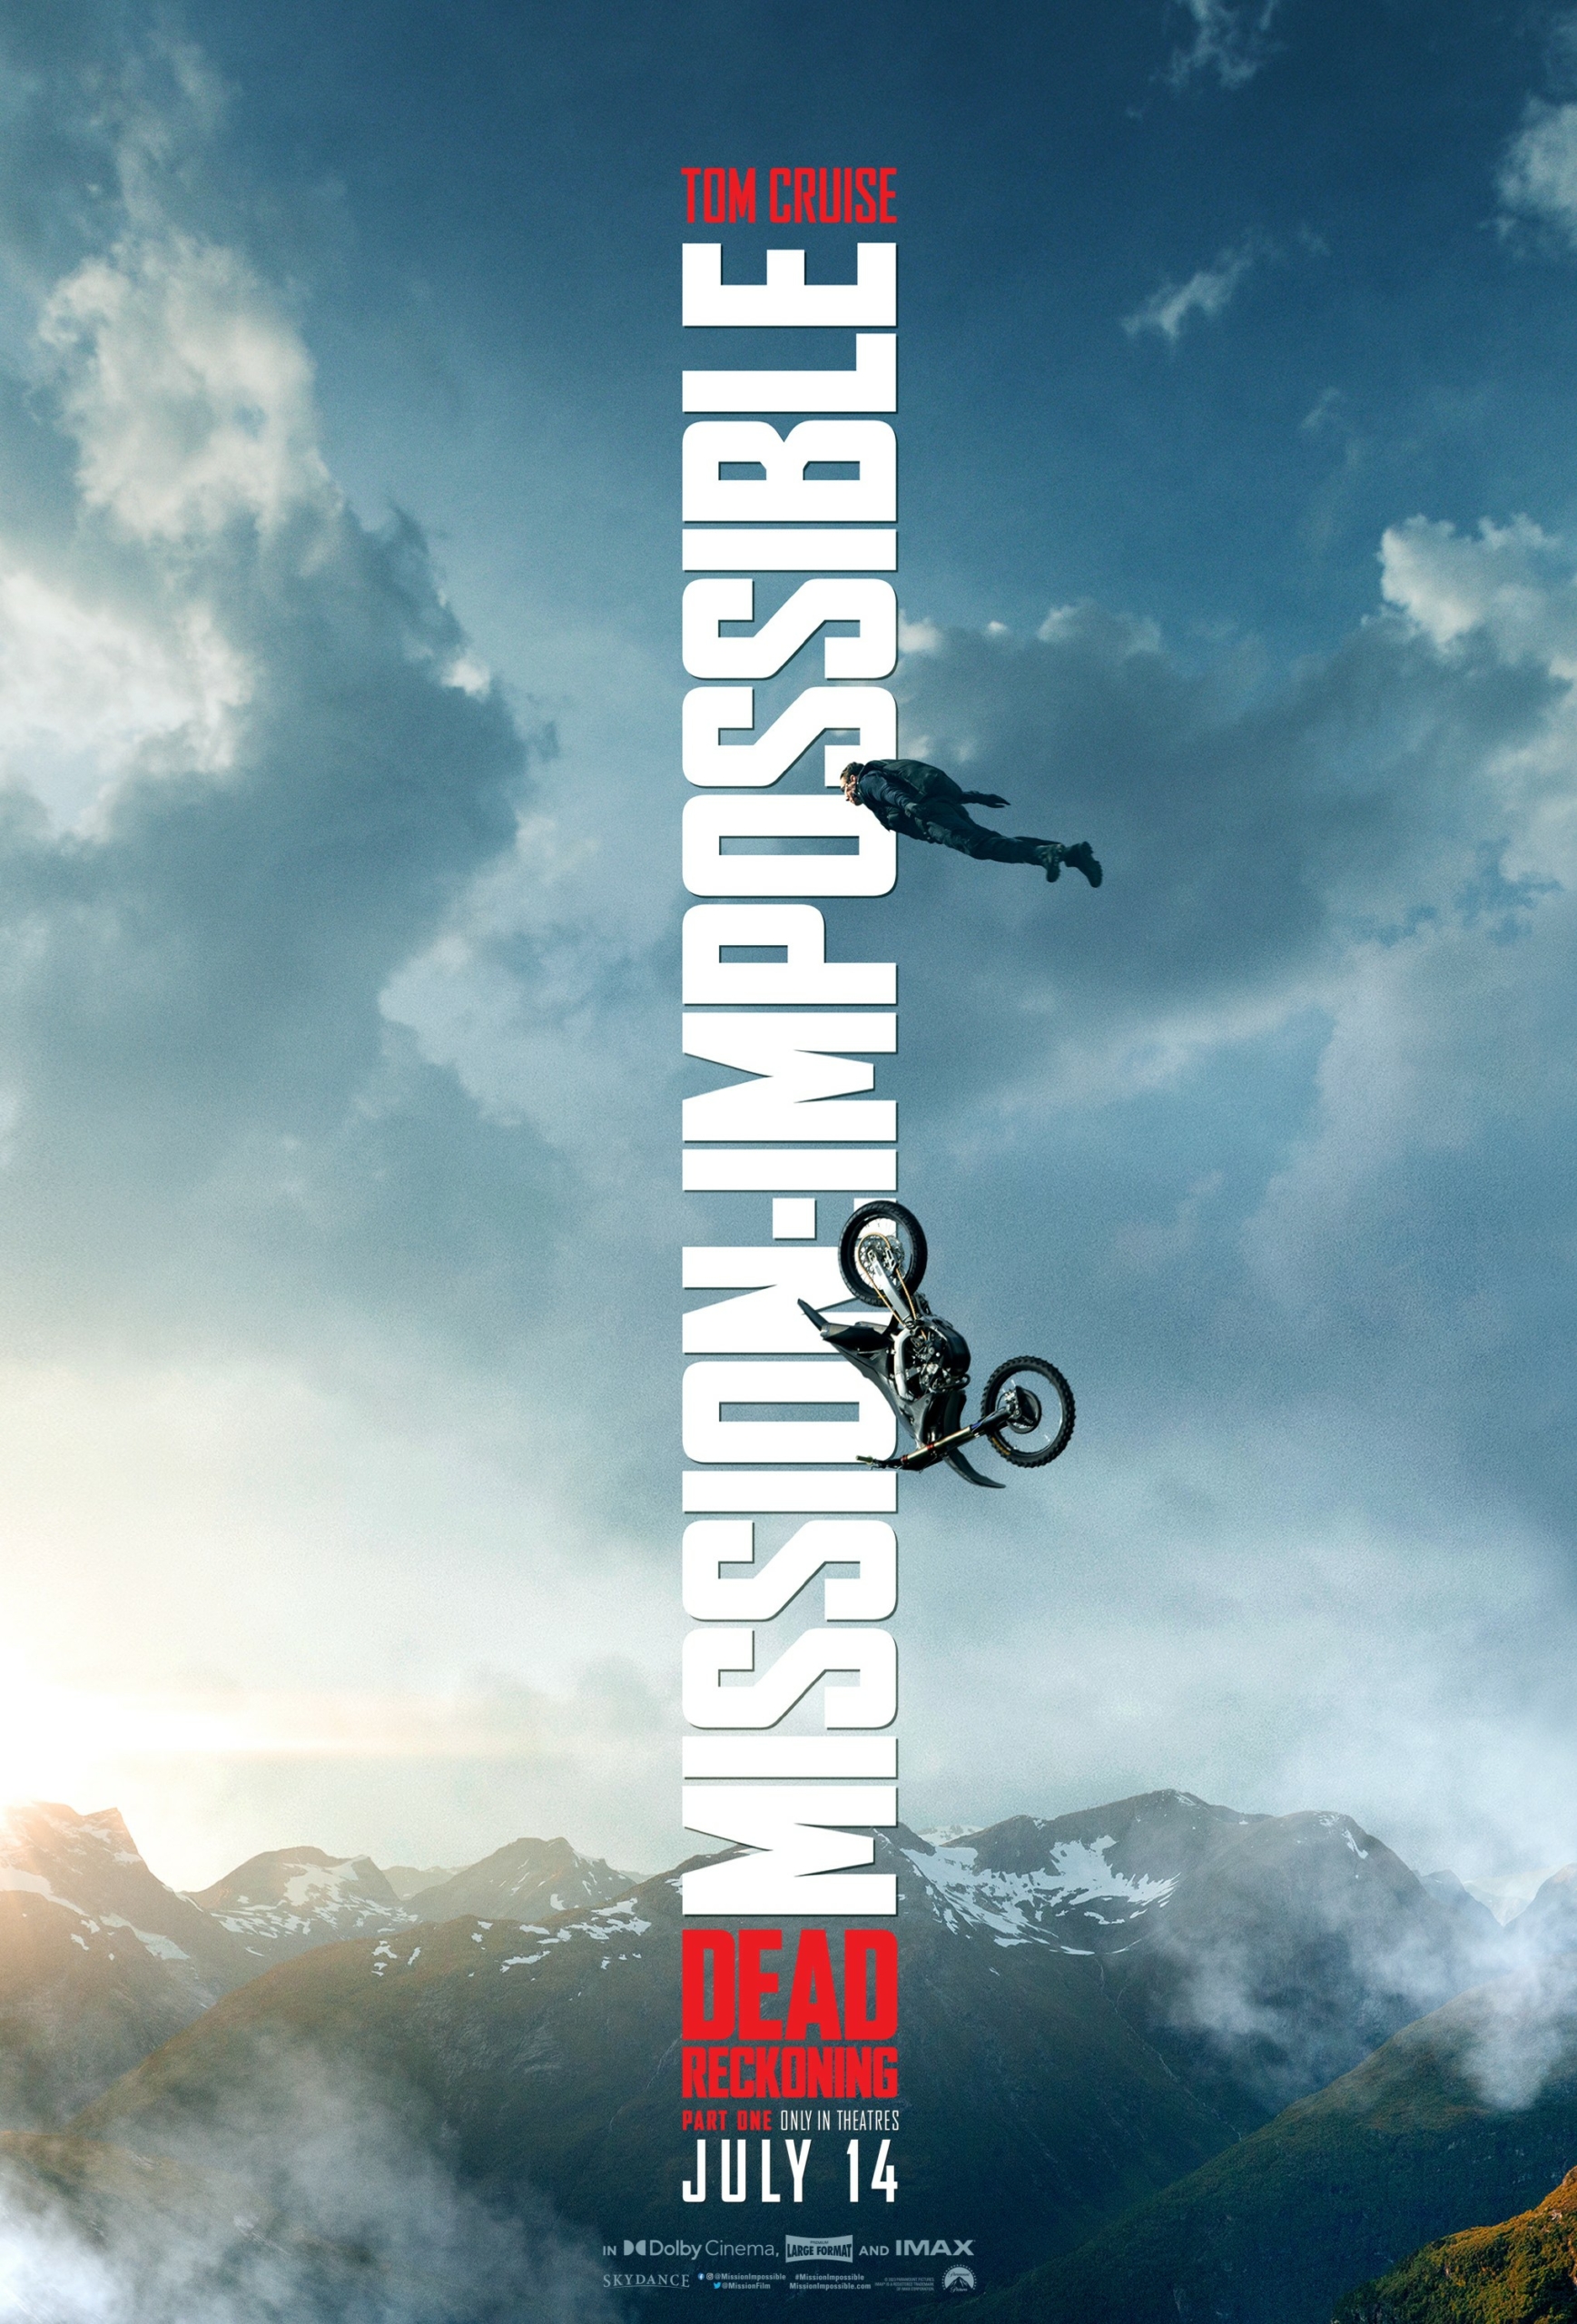 Bích chương phim “Mission: Impossible – Dead Reckoning Part One”. (Ảnh: Paramount Pictures/Skydance)